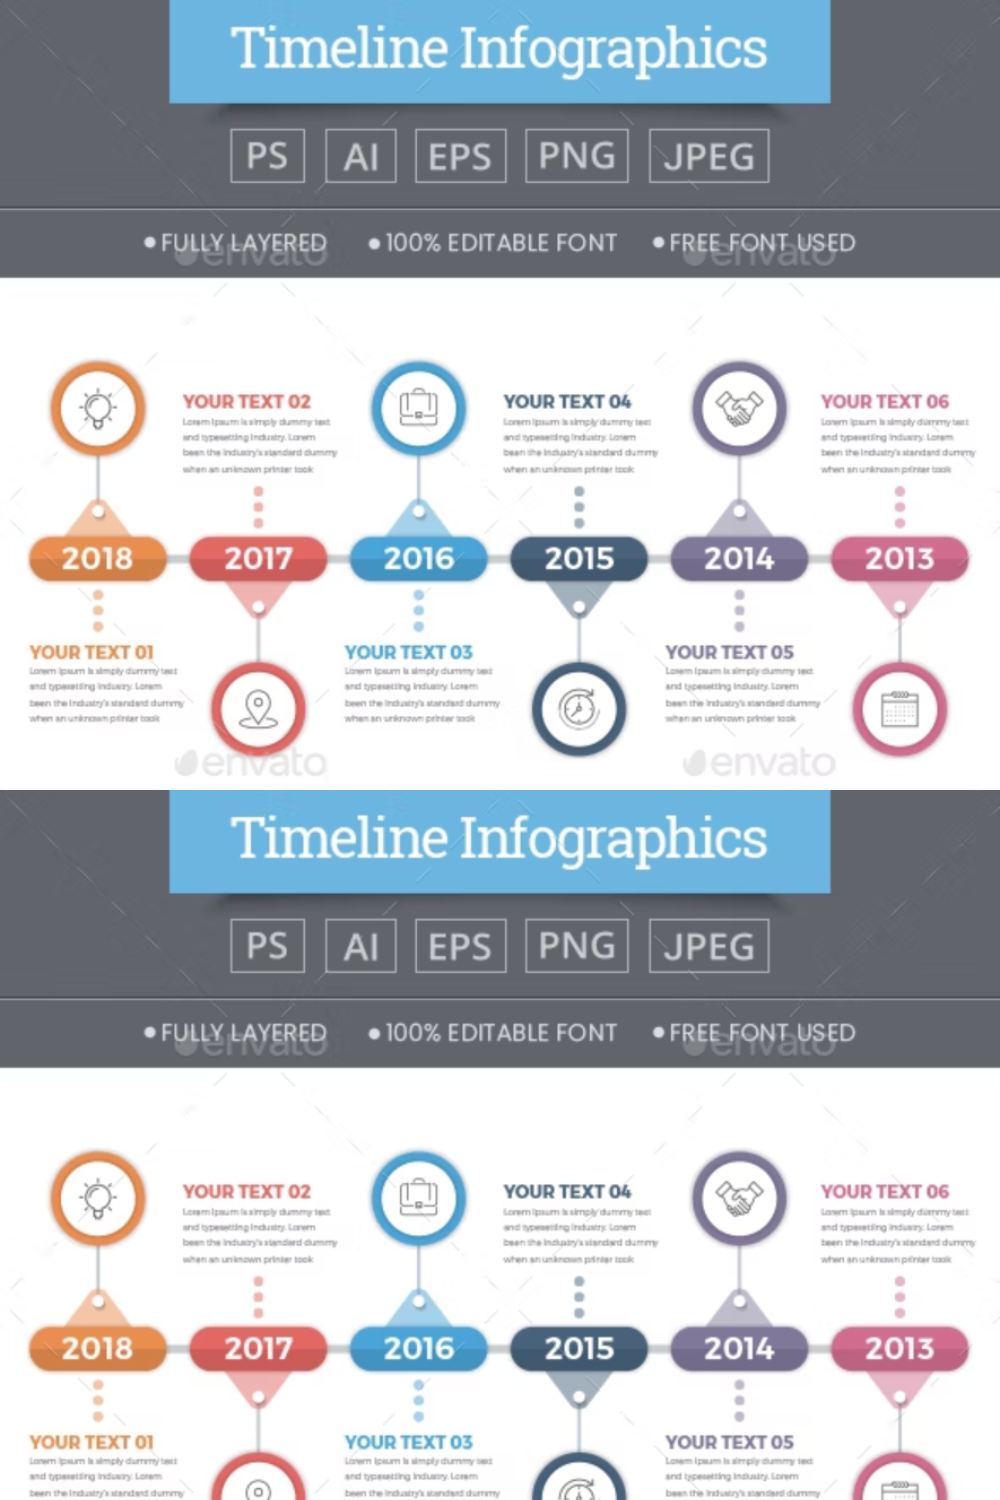 Timeline Infographics Pinterest Cover.